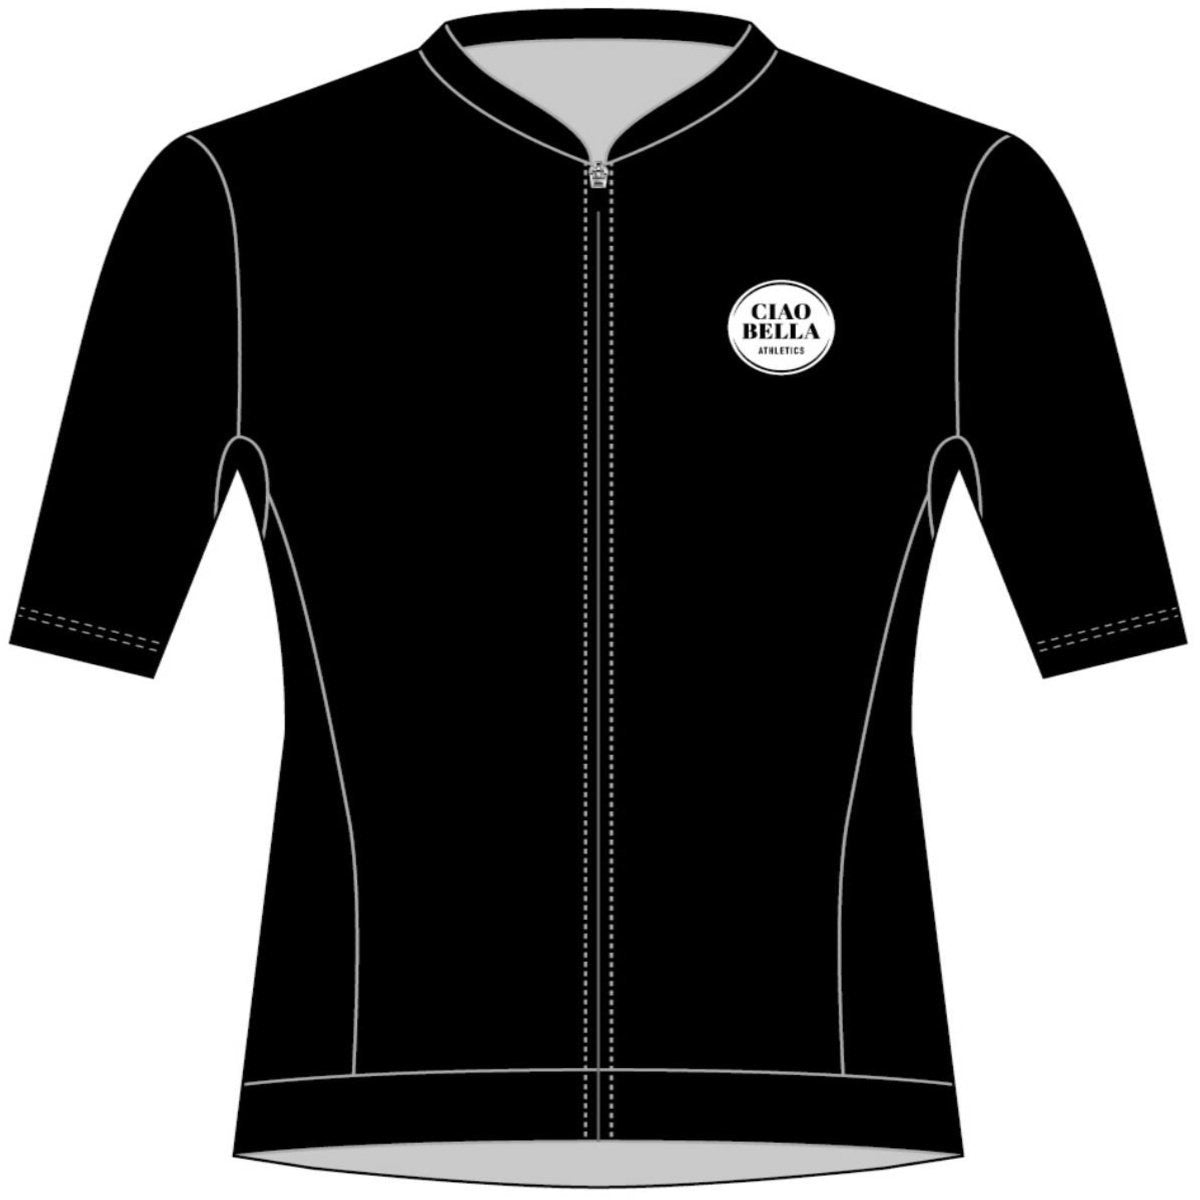 Short-Sleeved Triathlon Top - Black Pearl Design